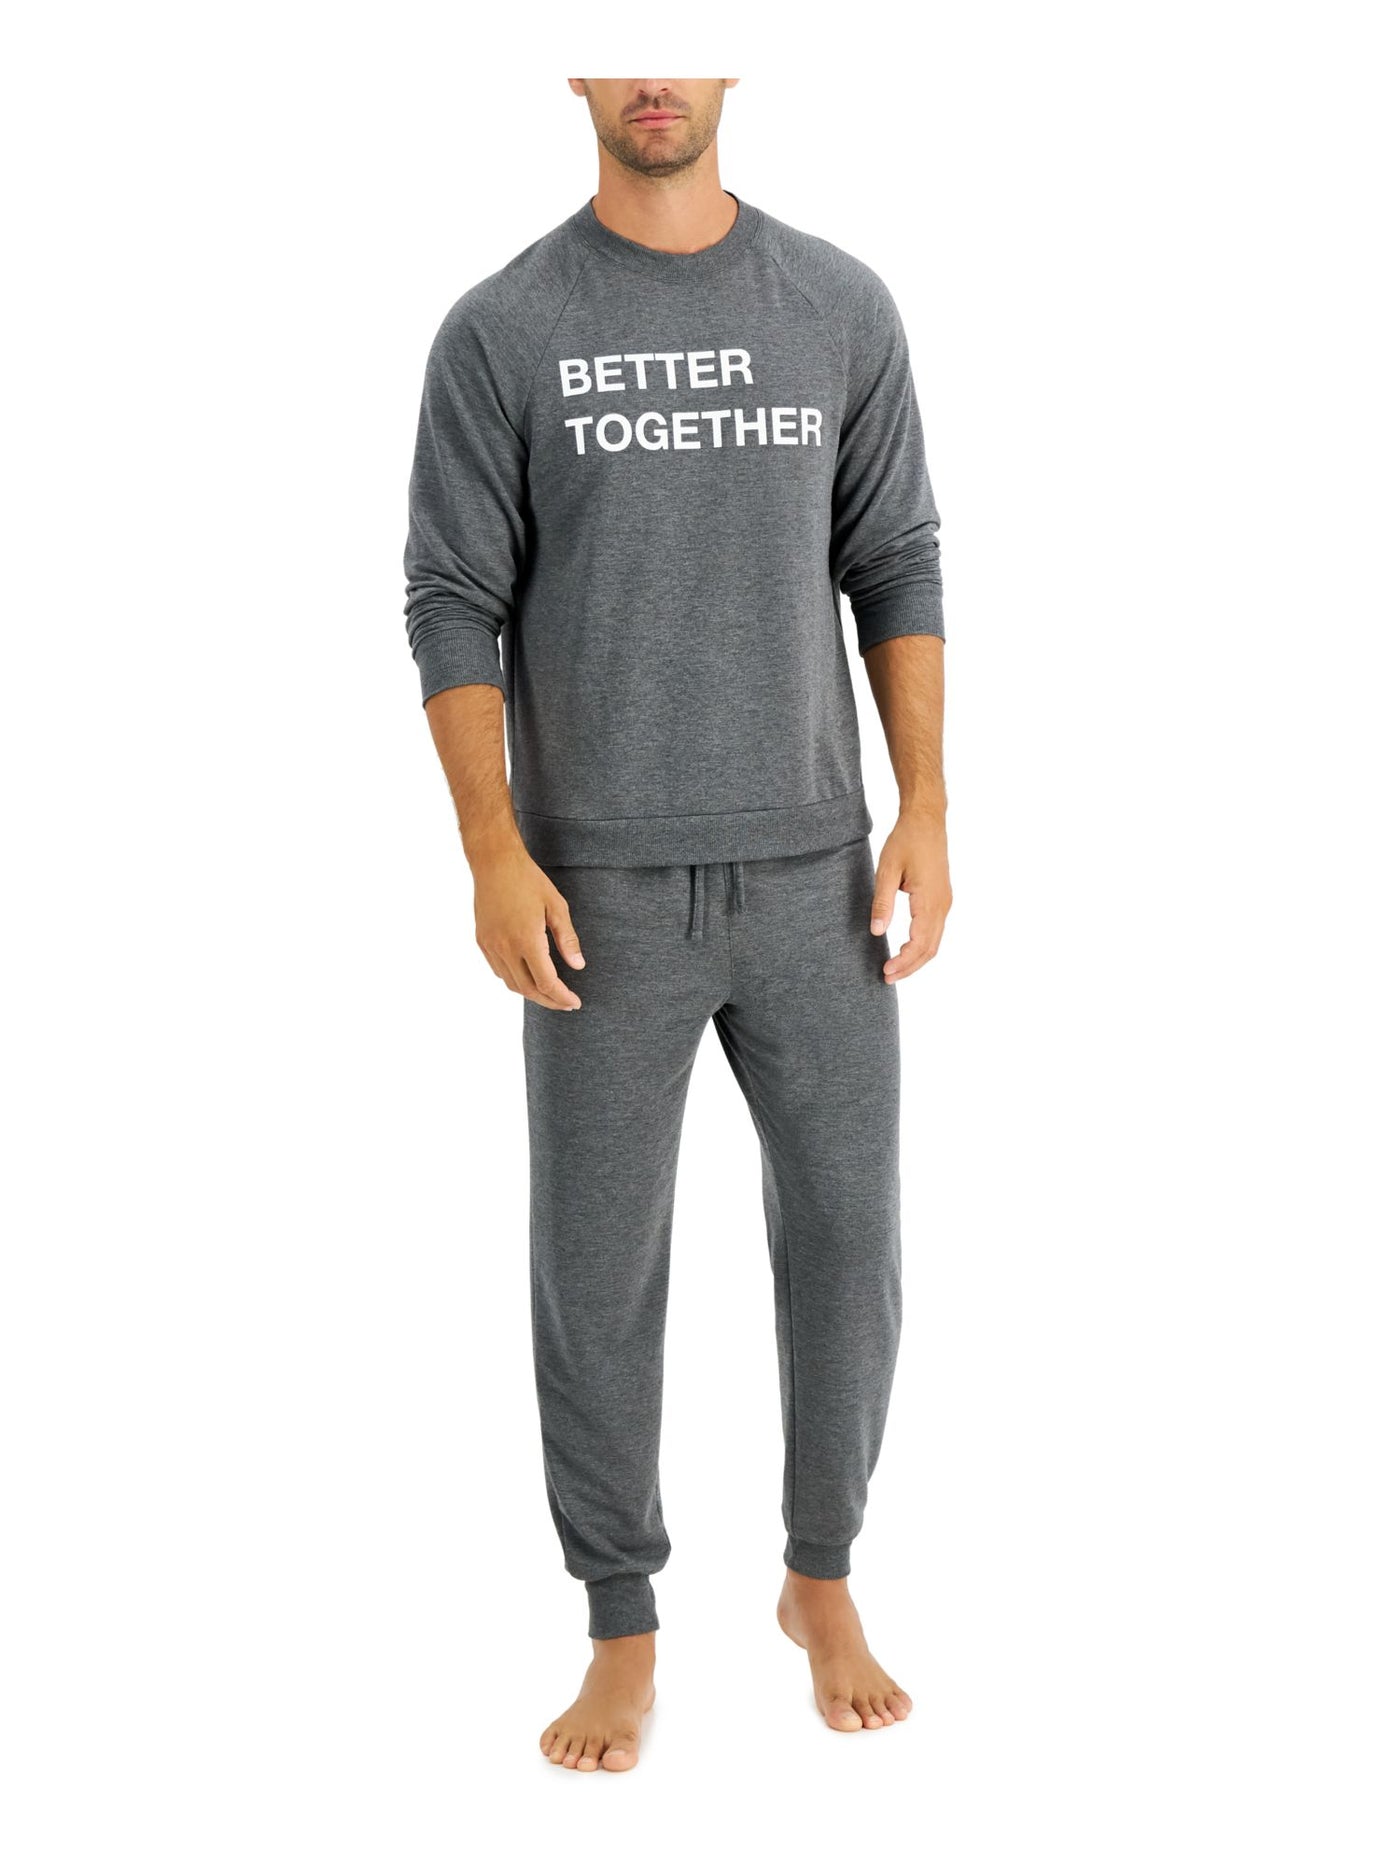 FAMILY PJs Mens Gray Graphic Drawstring Long Sleeve T-Shirt Top Cuffed Pants Pajamas XL